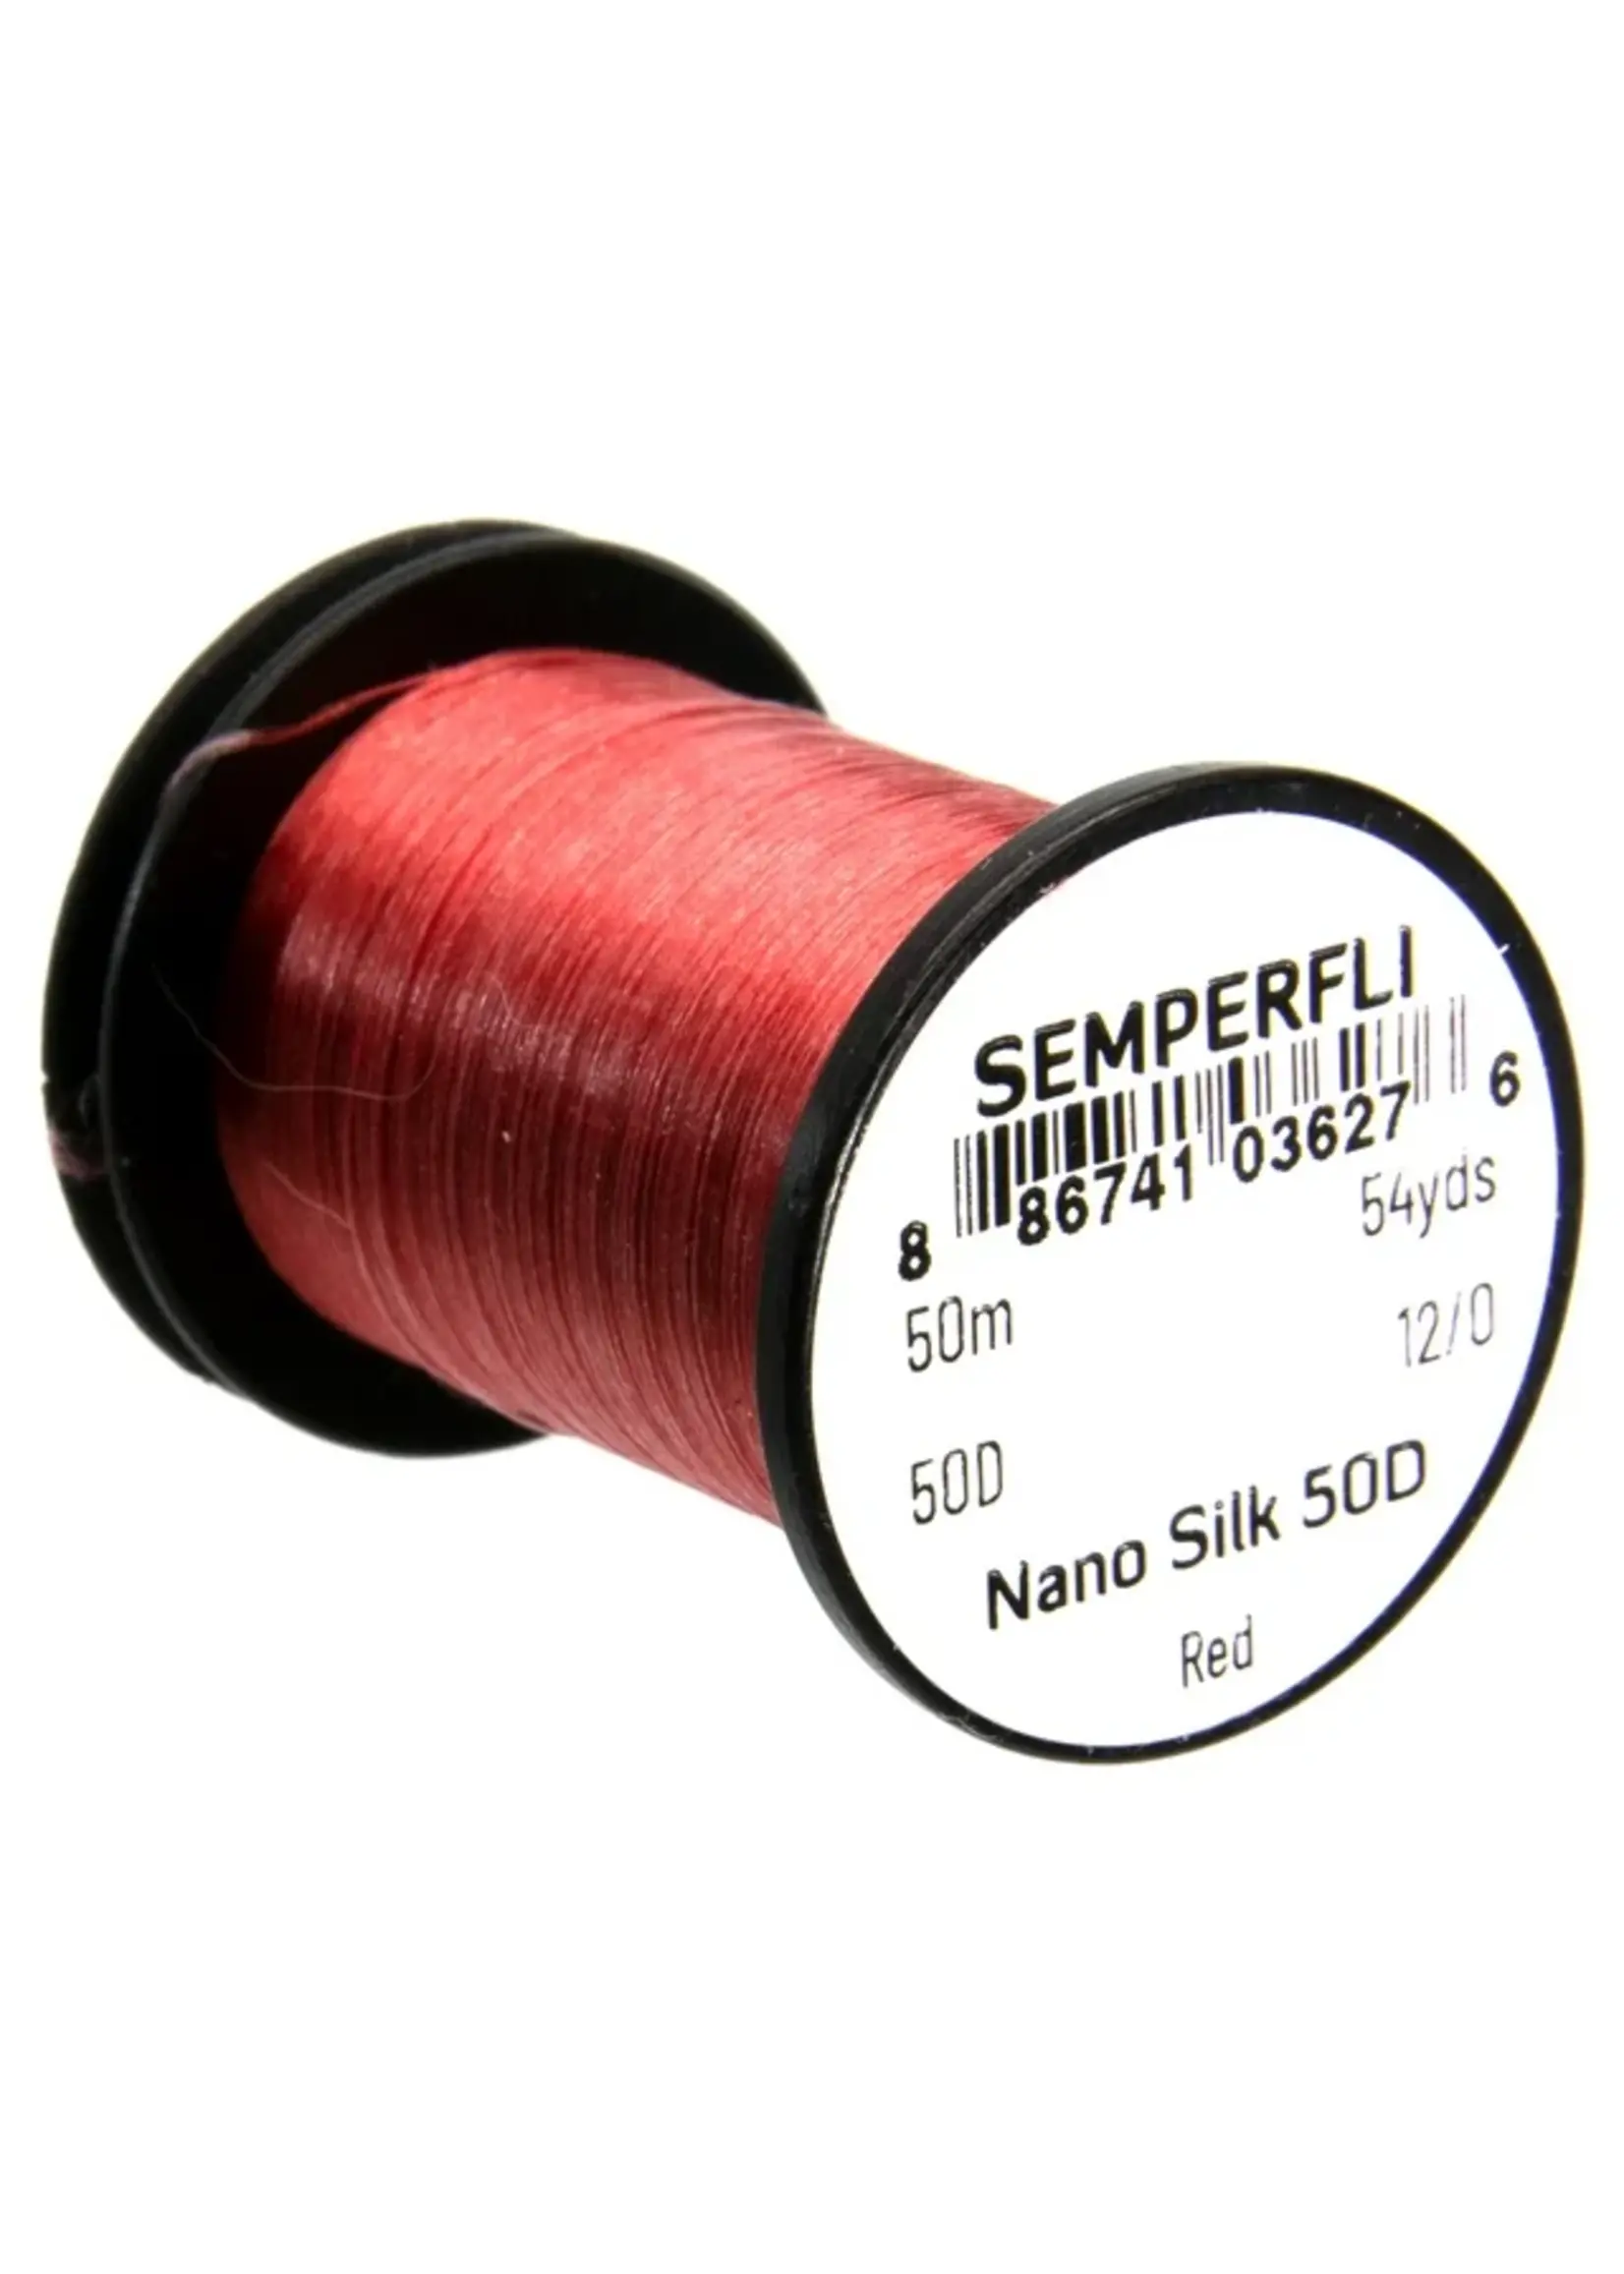 Semperfli Semperfli Nano Silk